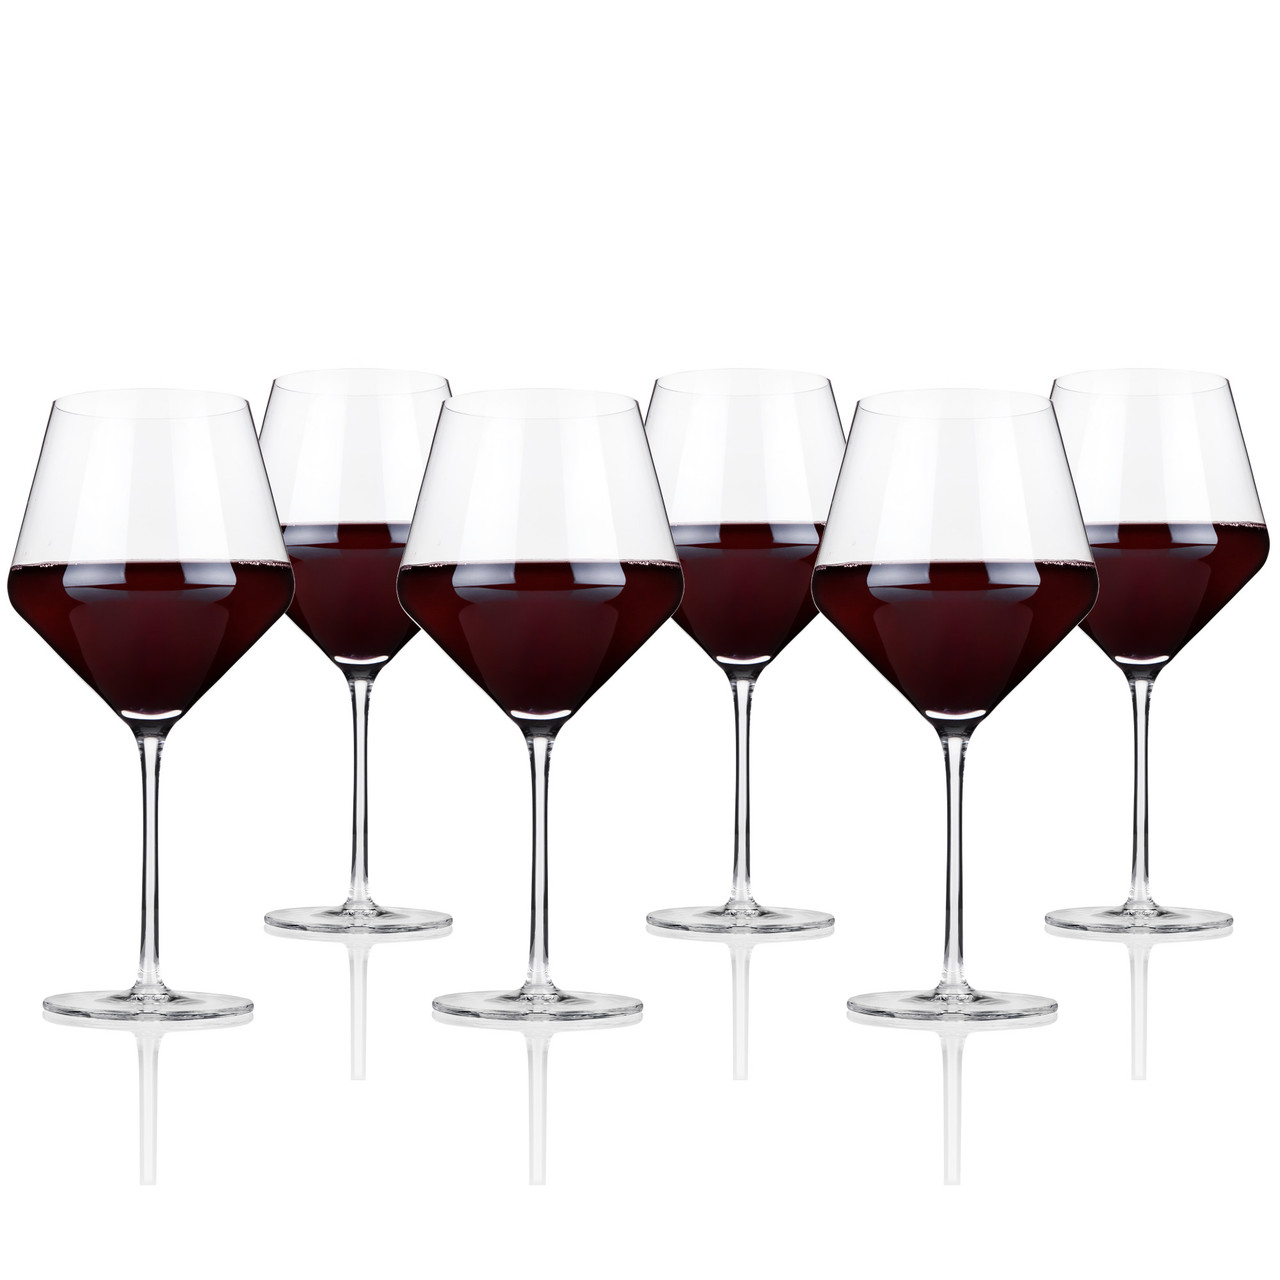 Angled Crystal Burgundy Glasses (Set of 6) by Viski